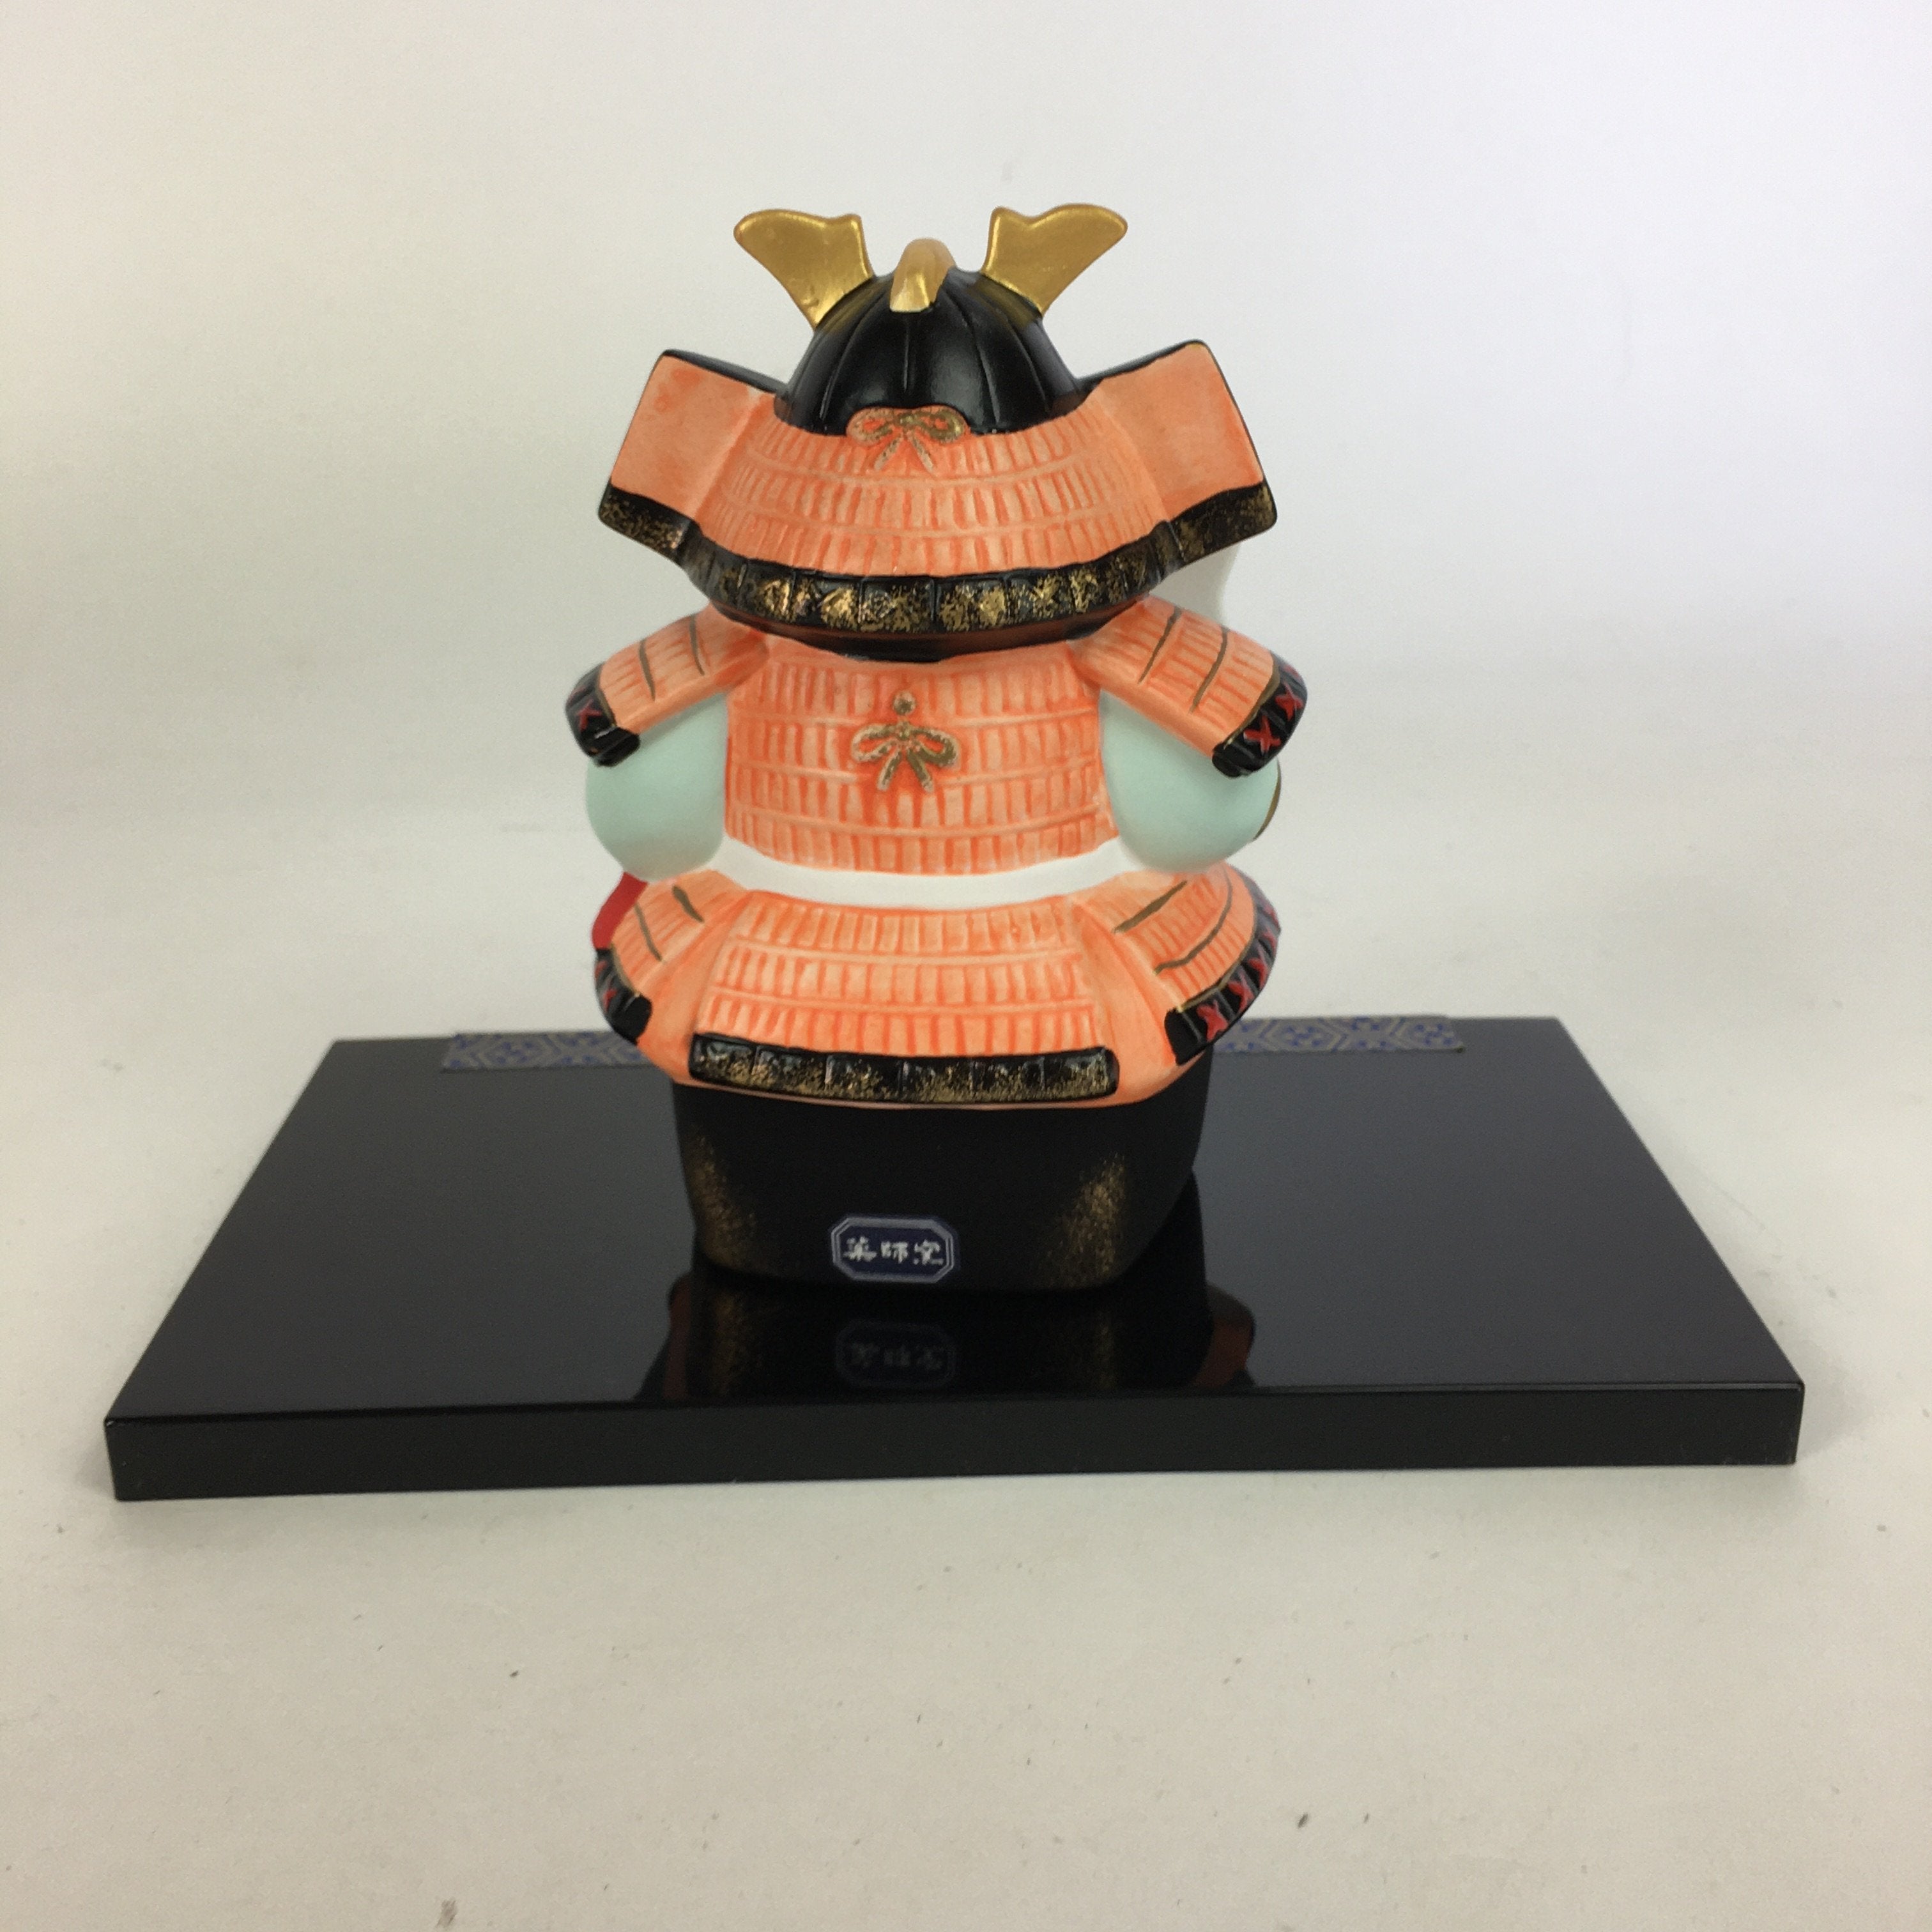 Japanese Ceramic Figure Ningyo Vtg Boy's Day Festival Figurine Okimono ID388